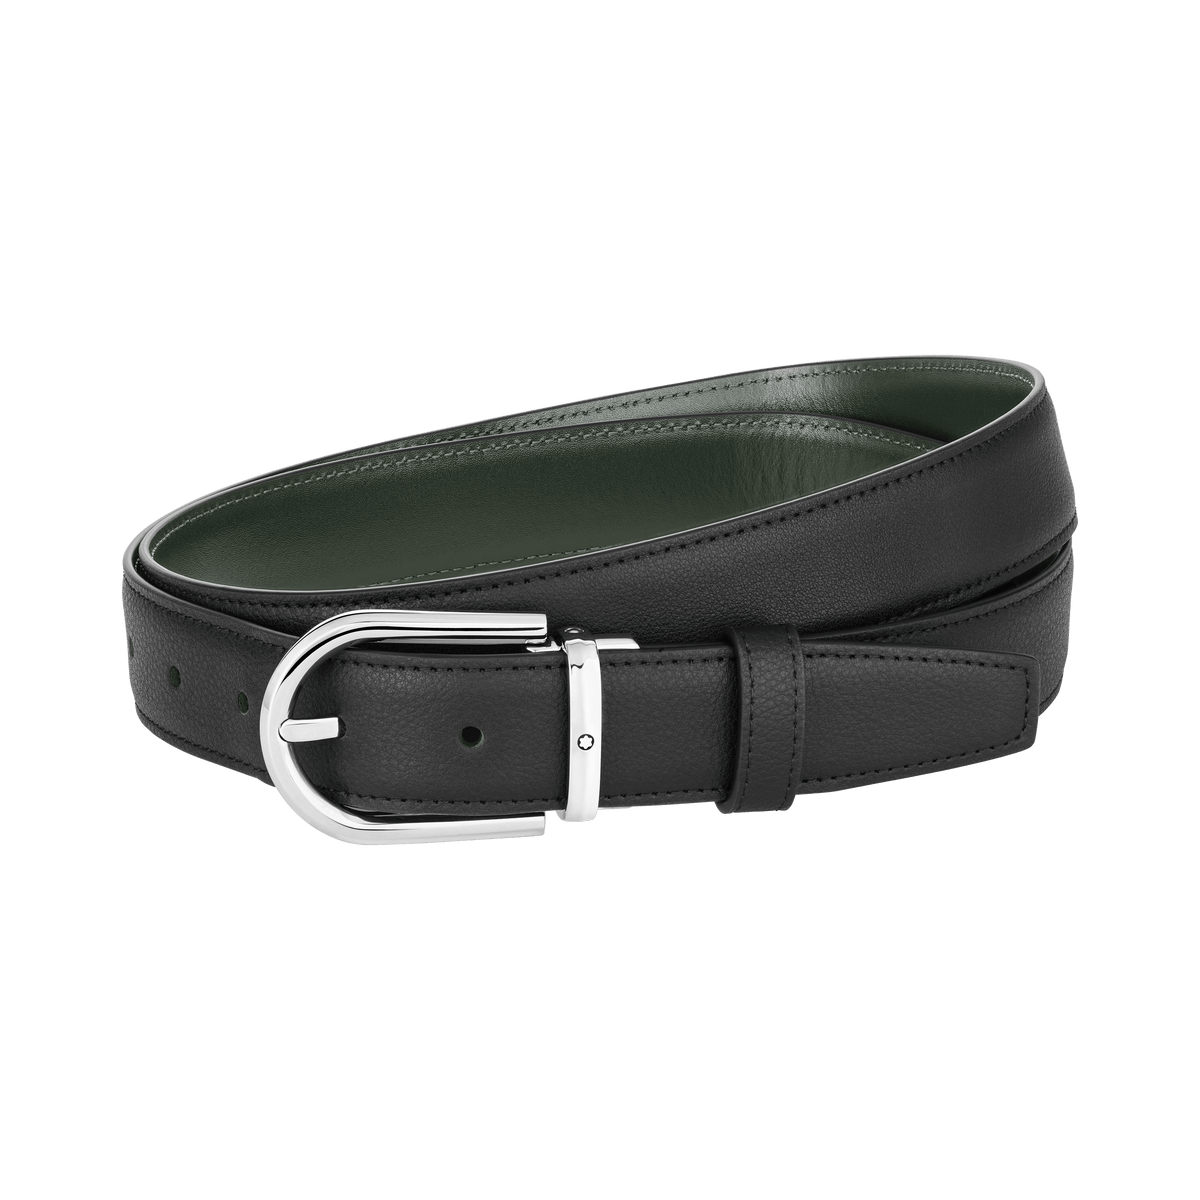 Horseshoe buckle black/green 30 mm reversible leather belt